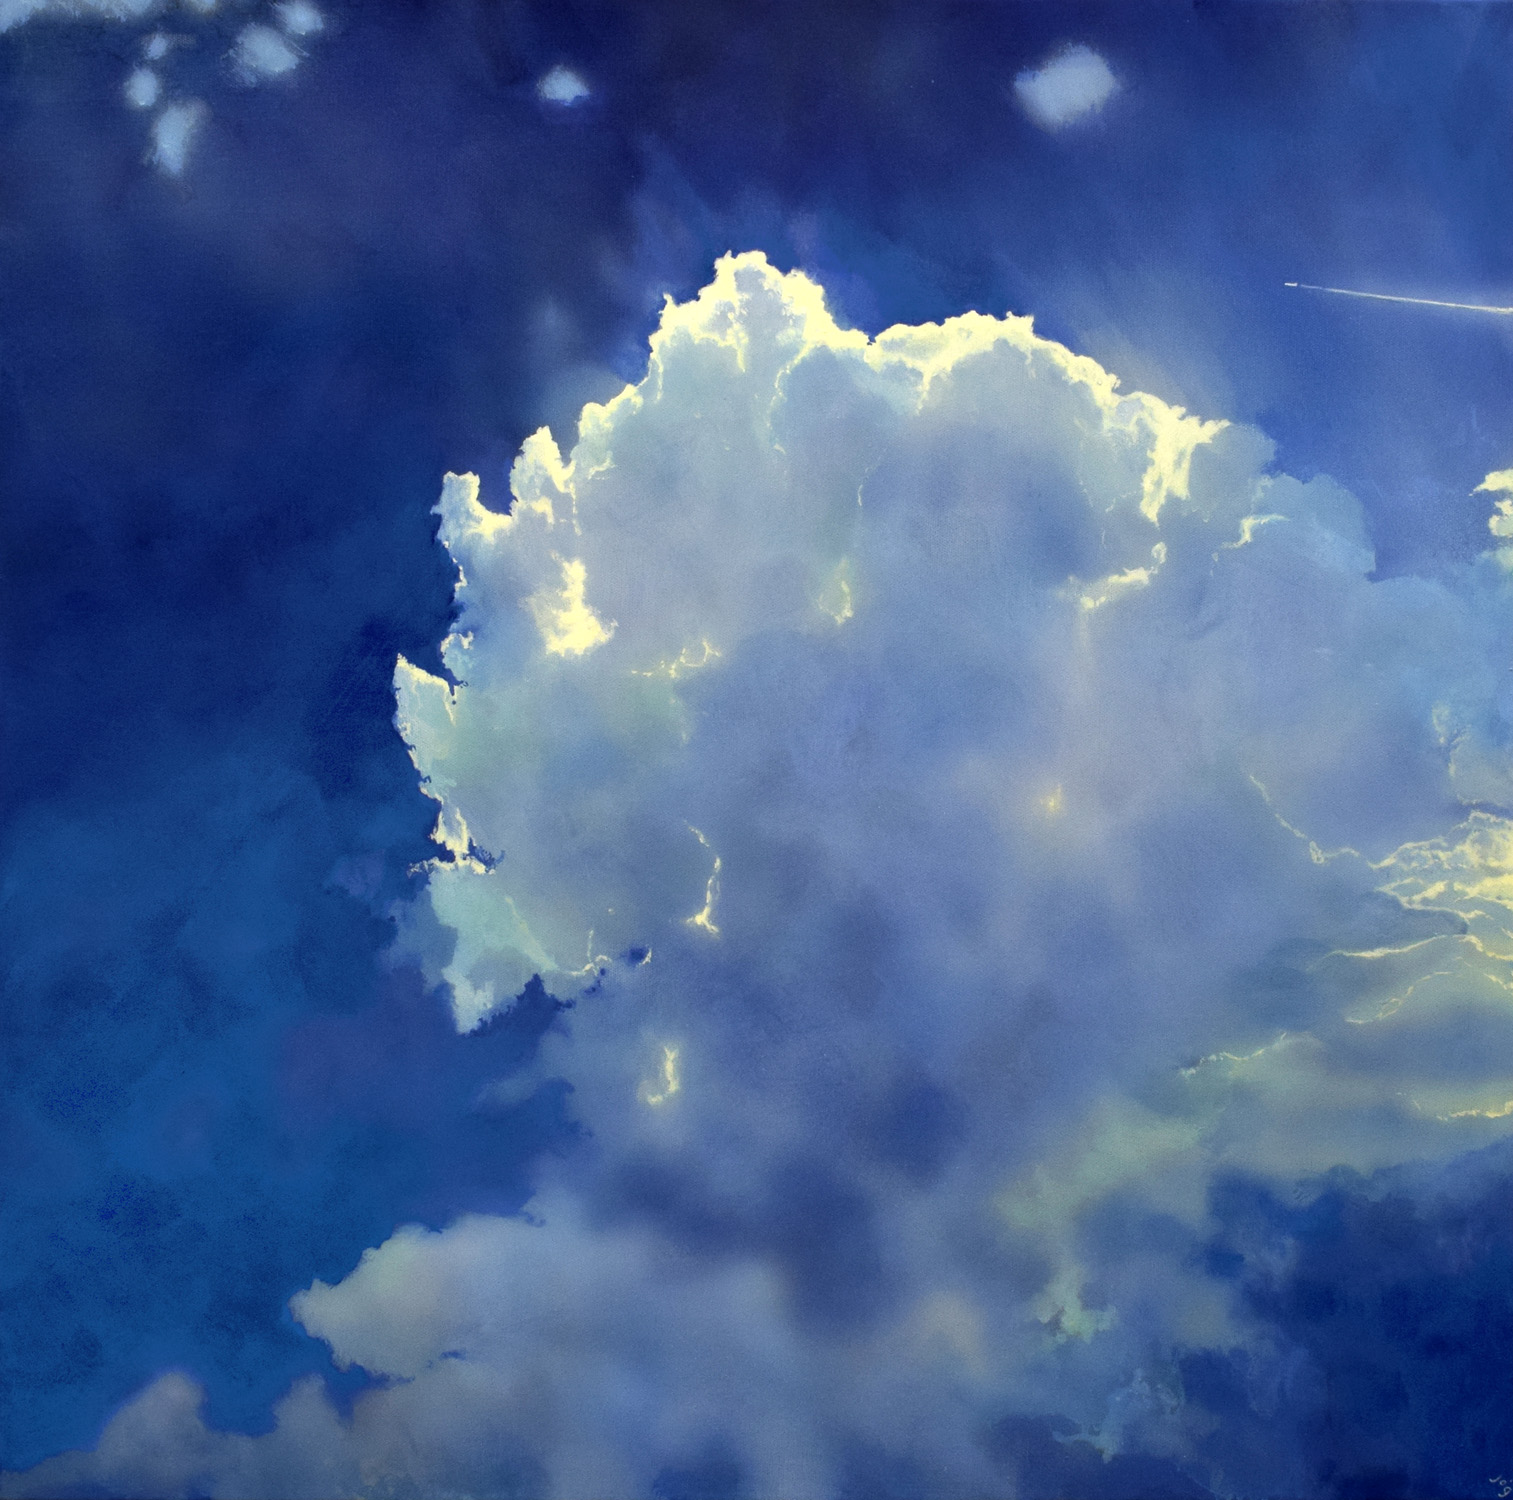 Icarus IV by John O'Grady | A light-filled cloudscape against a dark blue sky